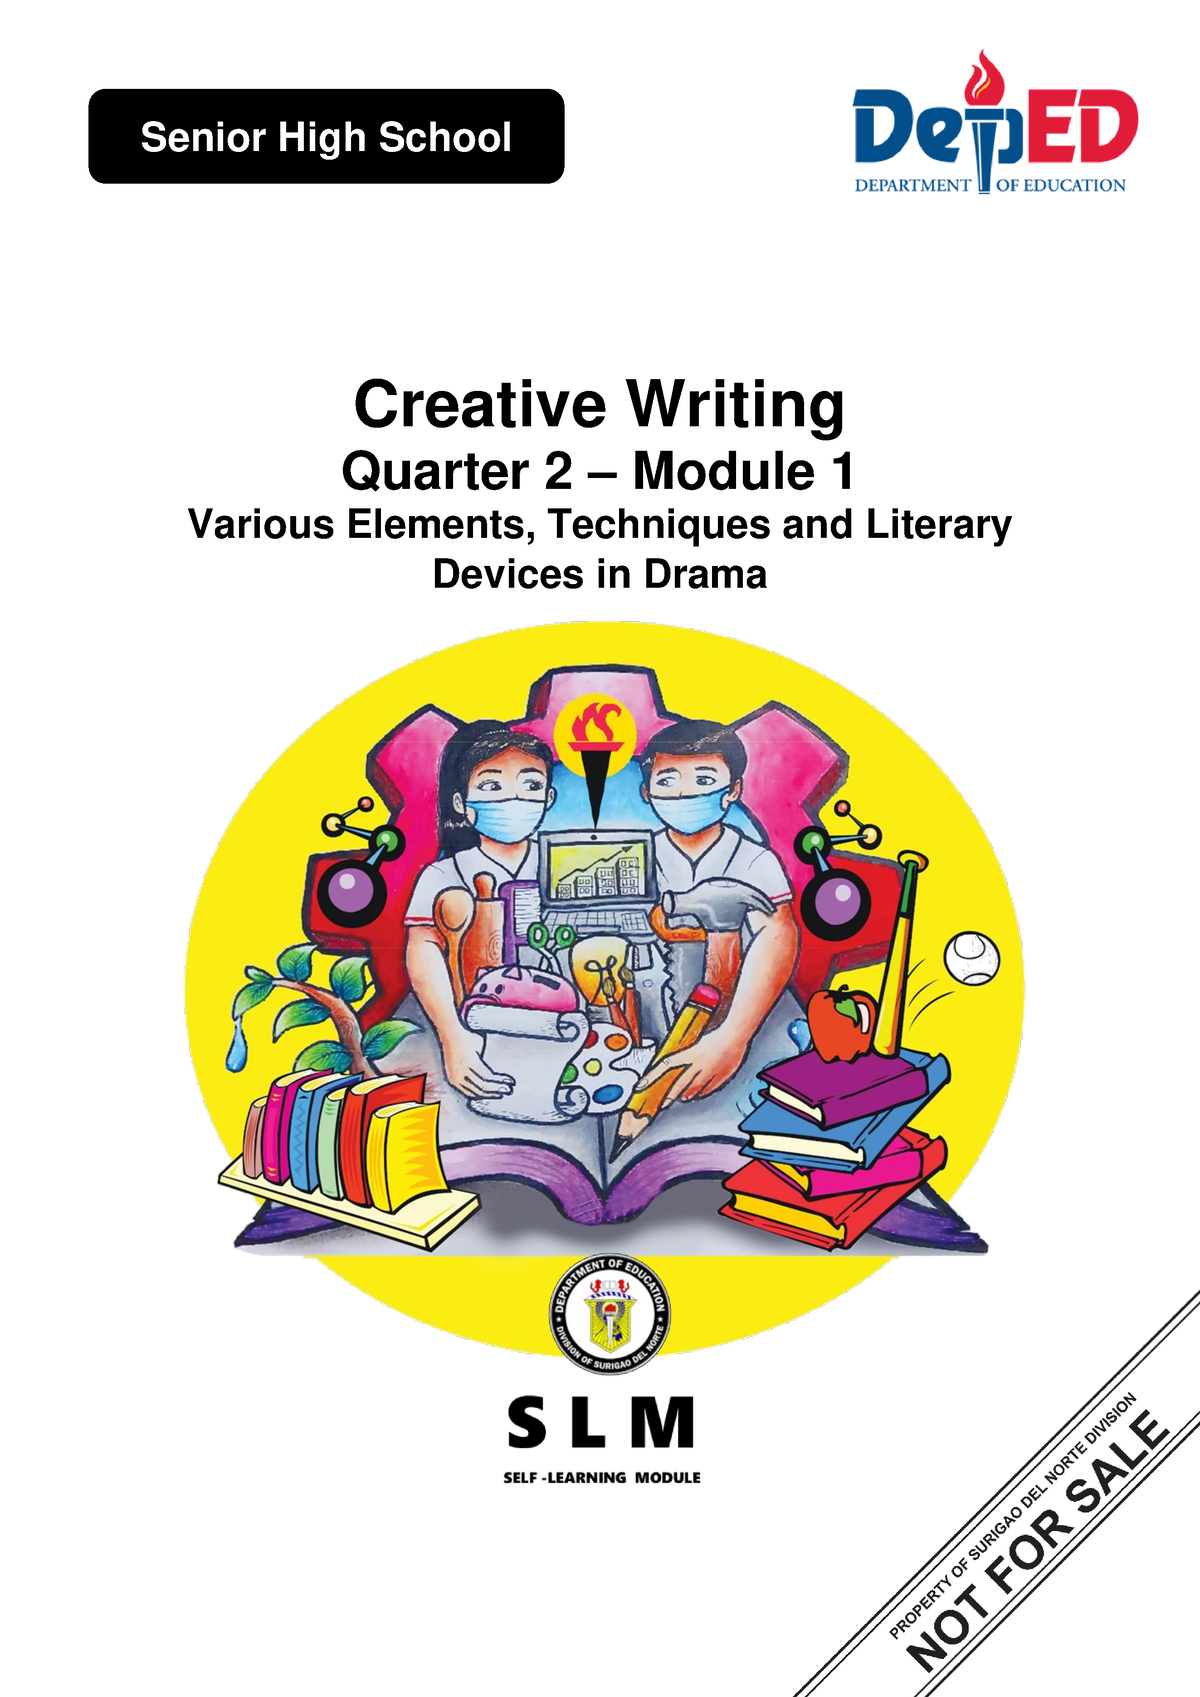 creative writing quarter 2 module 4 pdf